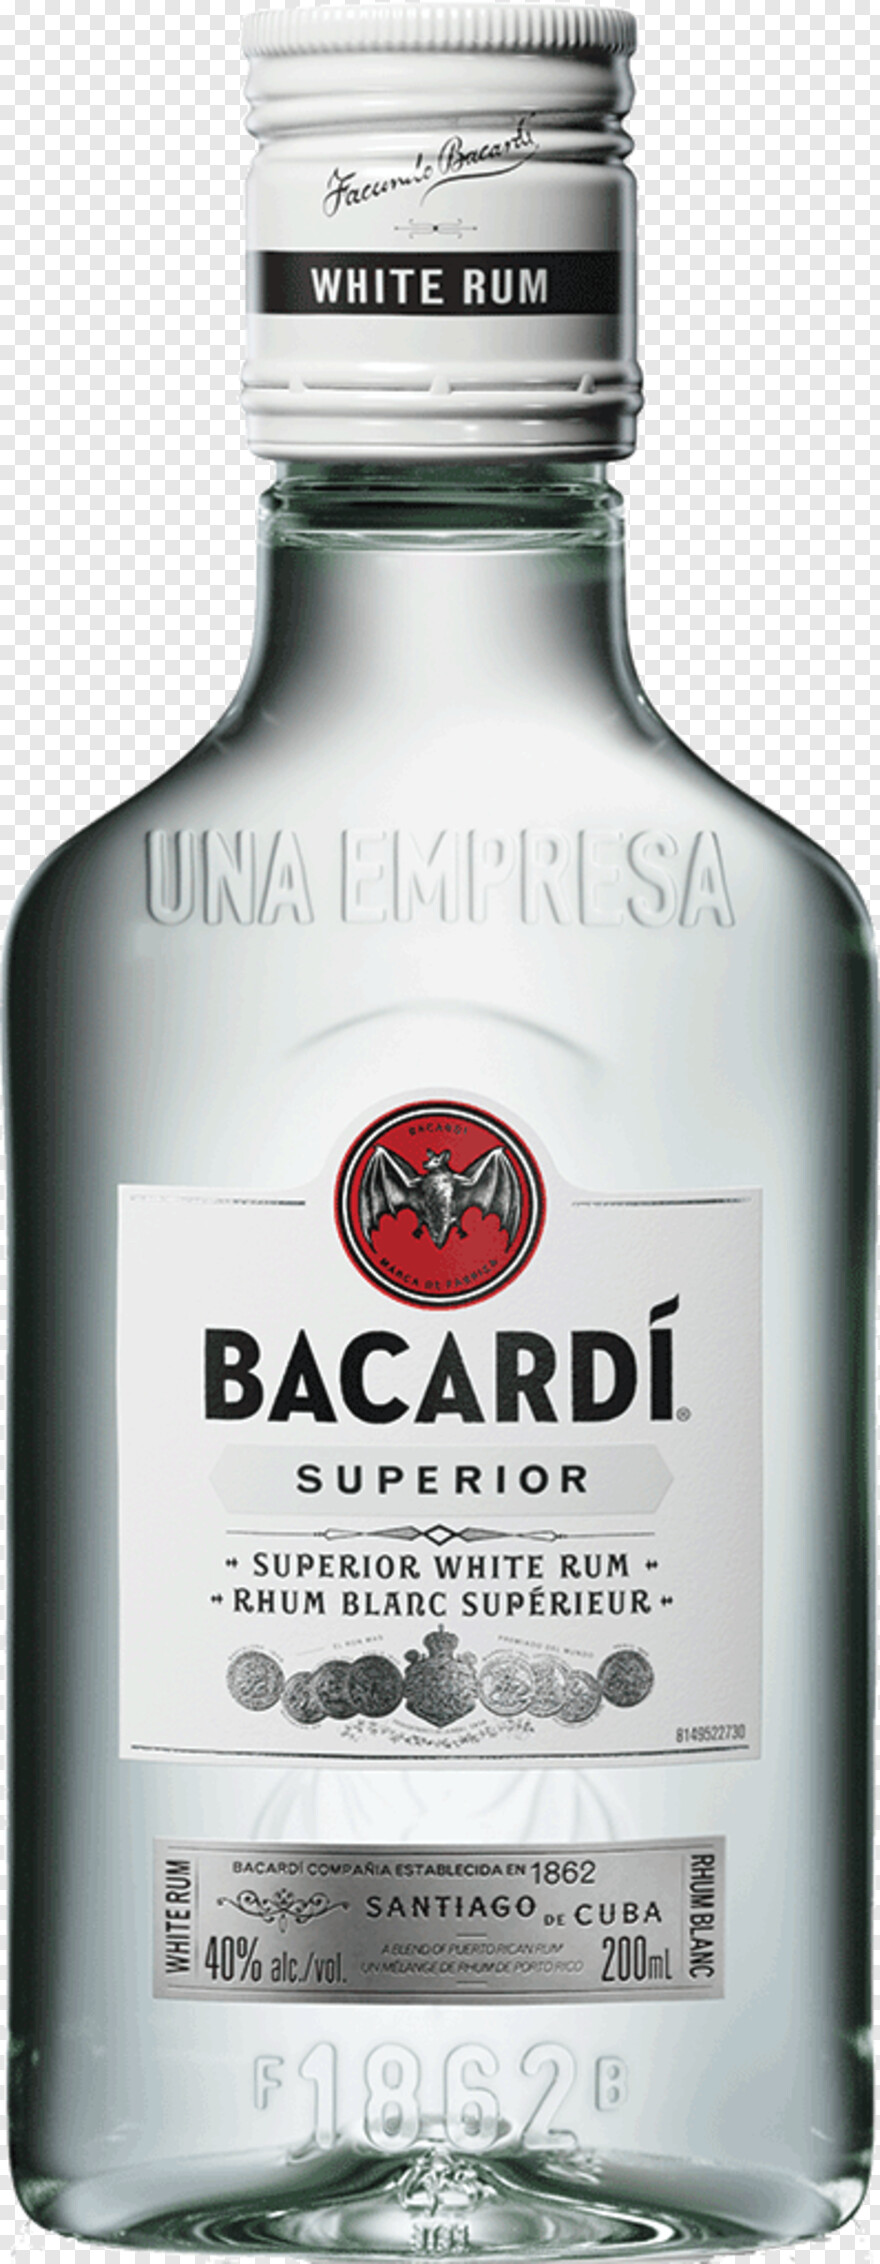 bacardi-logo # 630870